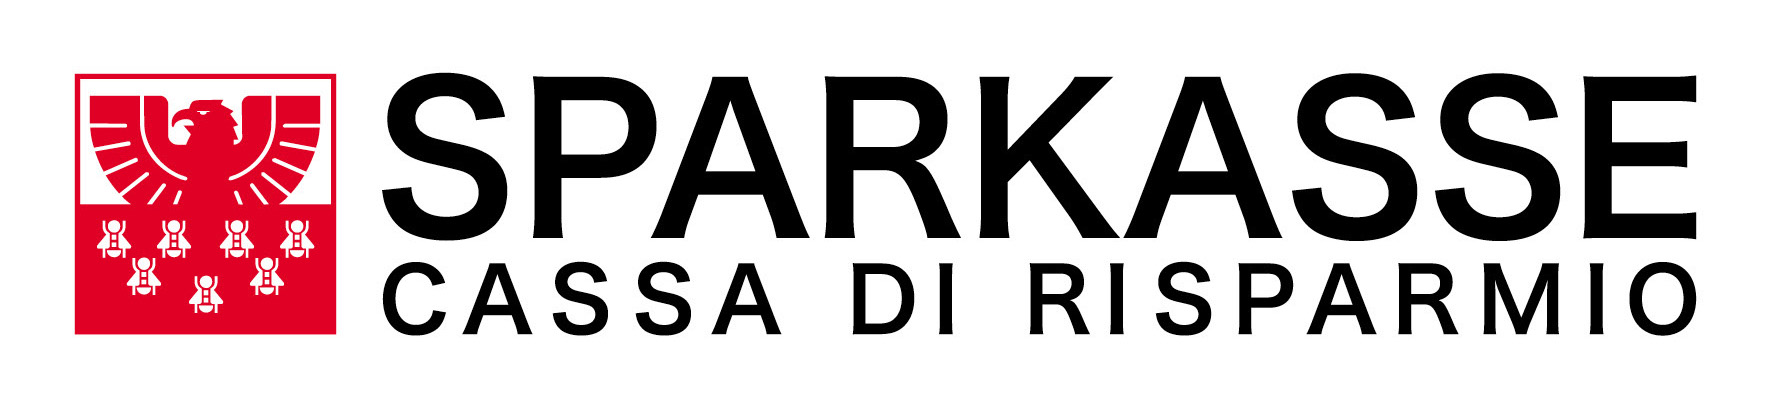 Logo Sparkasse 2013 neutral